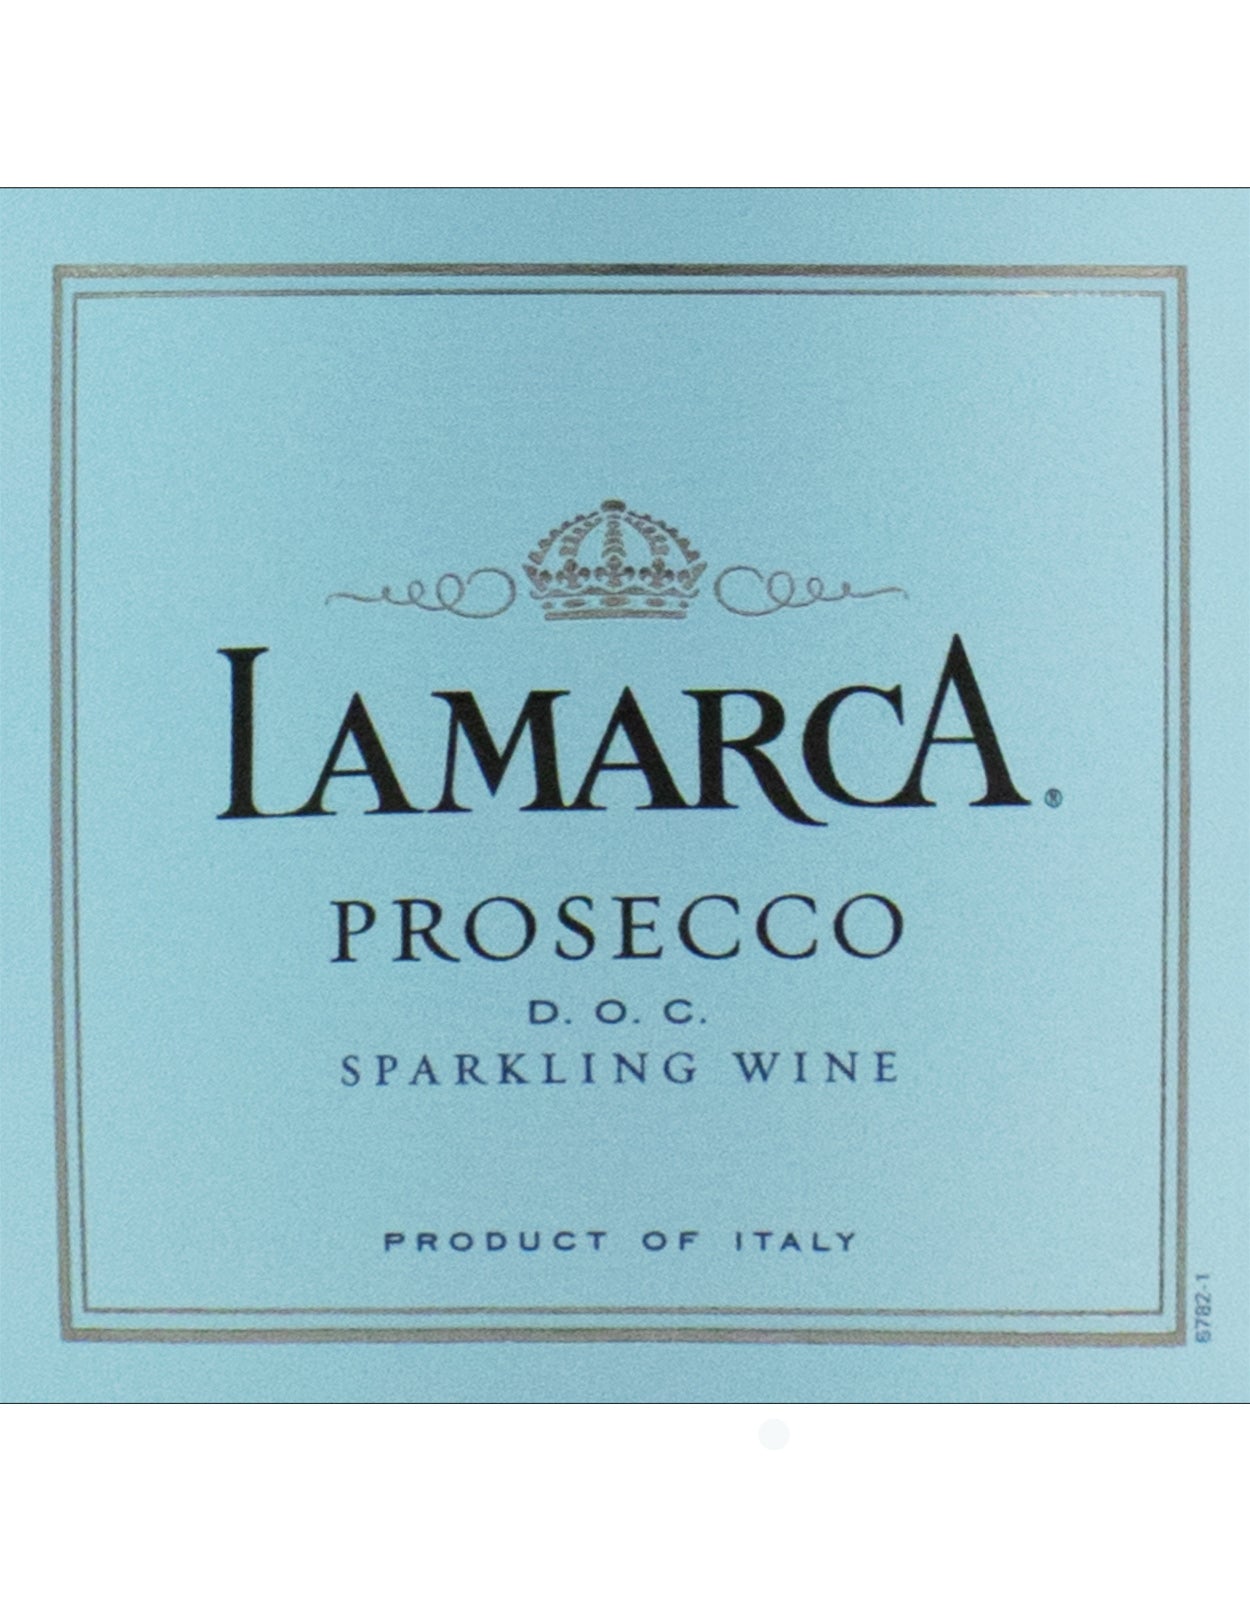 Lamarca Prosecco 187 ml - 24 Bottles